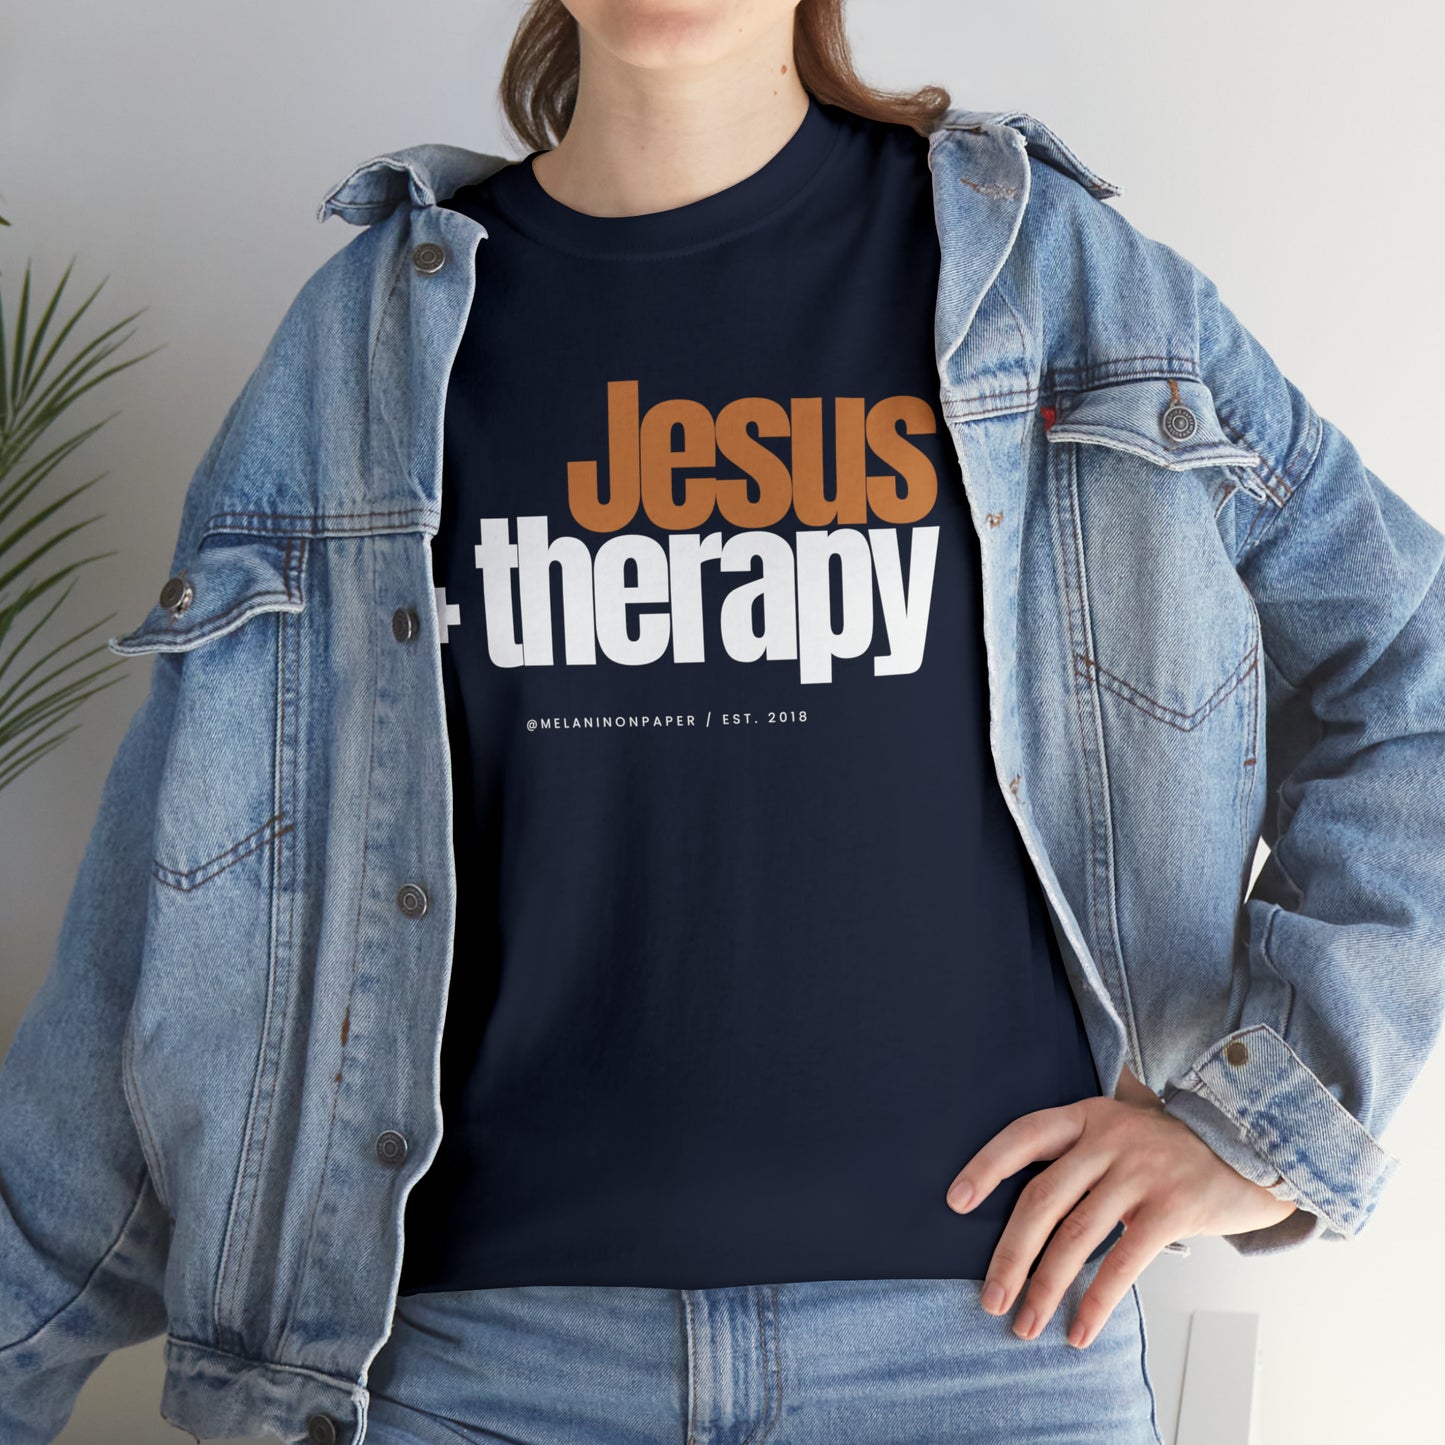 "Jesus + therapy" Unisex Heavy Cotton Tee - Black, Graphite Heather Grey, Dark Heather Grey, & Navy